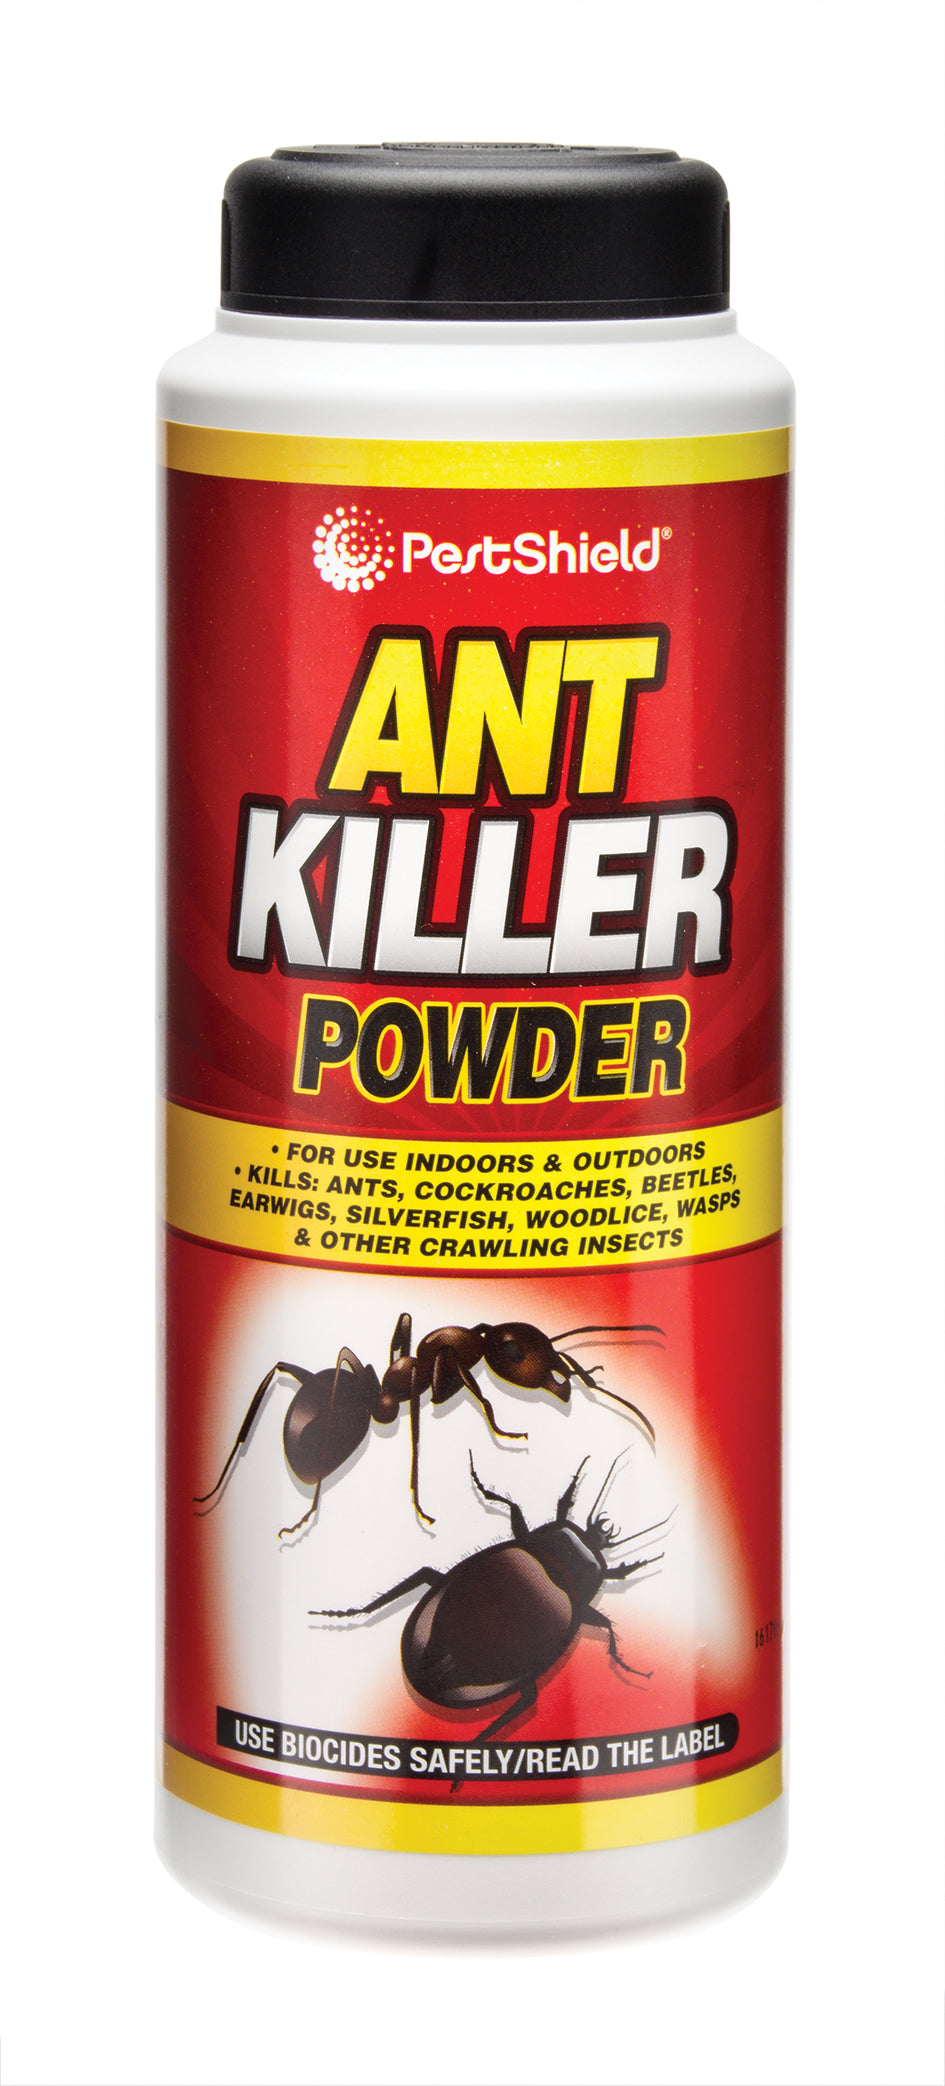 Powder killer